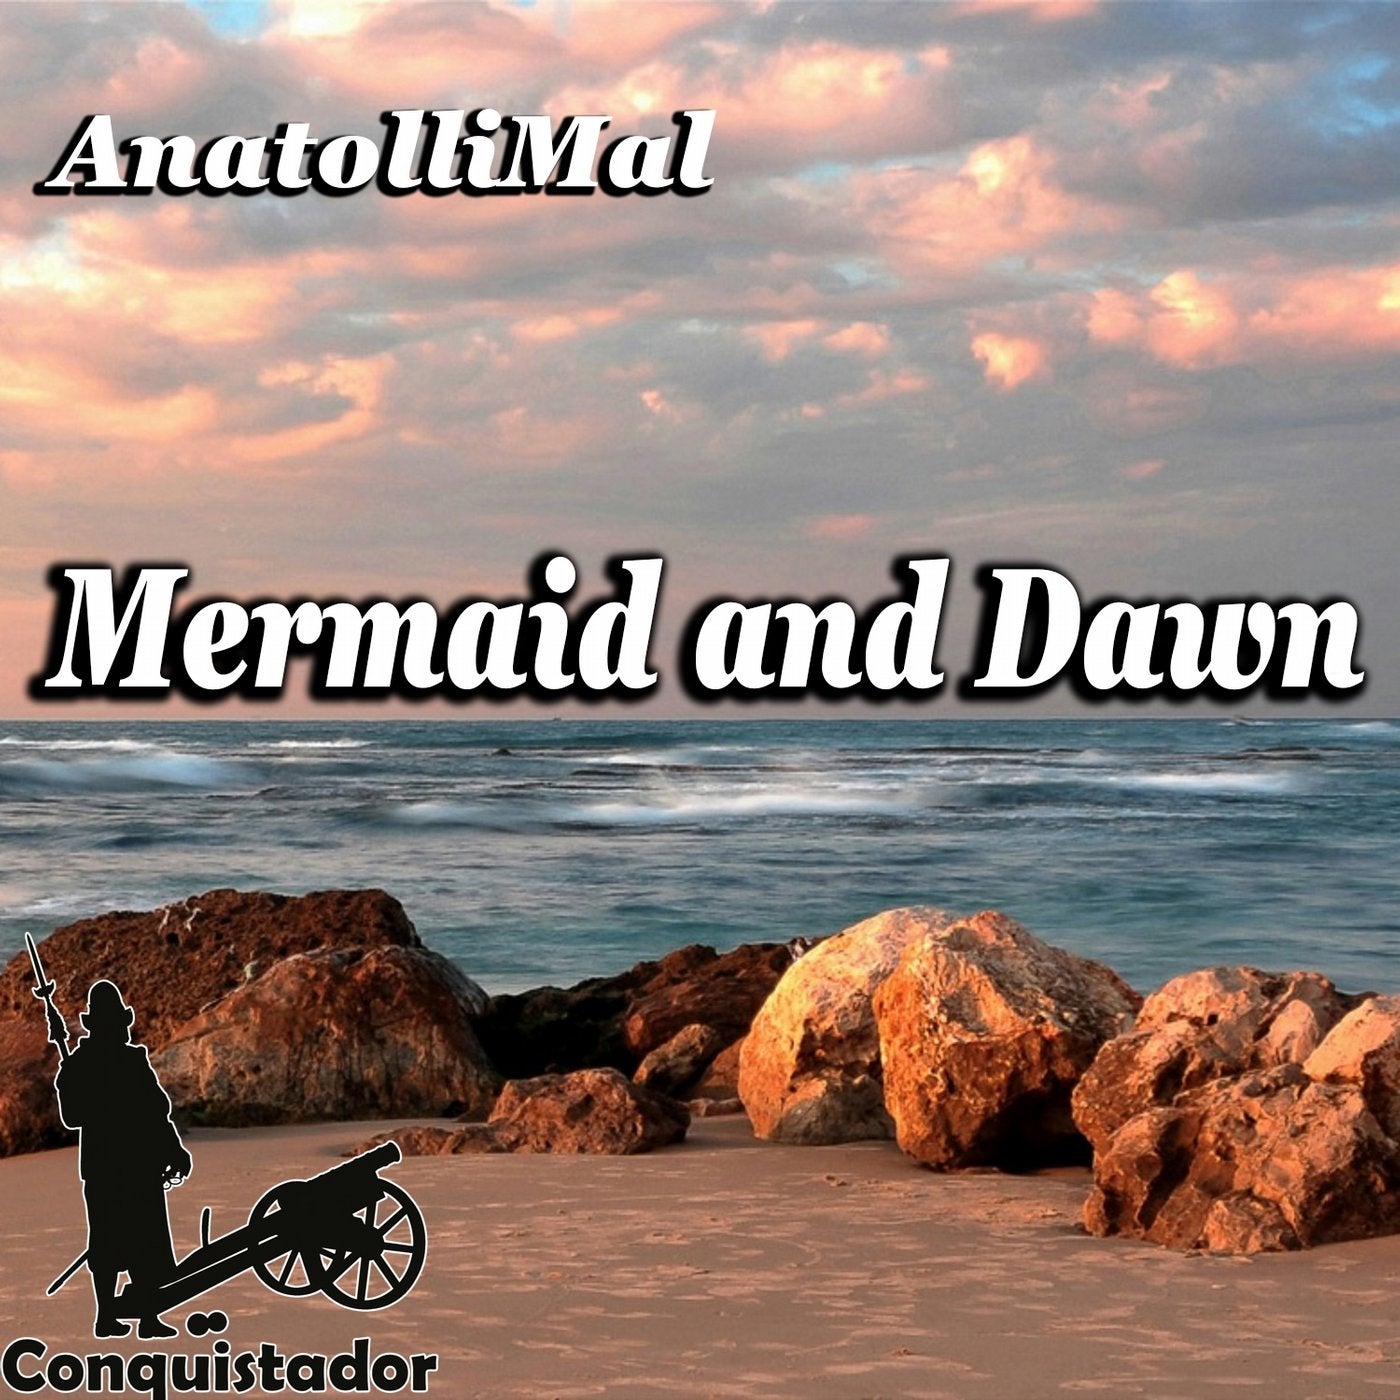 Mermaid and Dawn